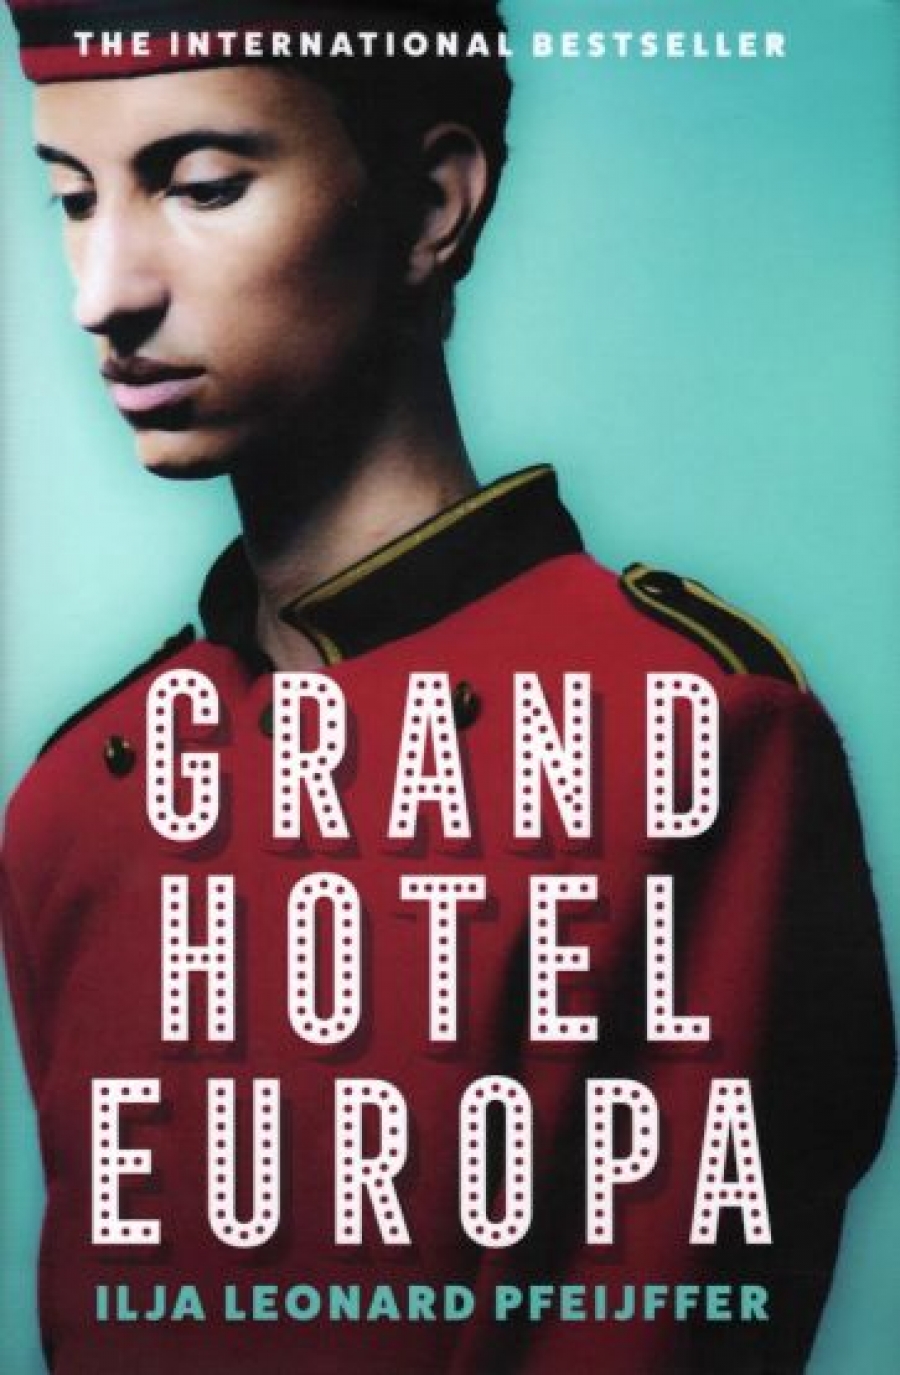 Pfeijffer Ilja Leonard Grand Hotel Europa 